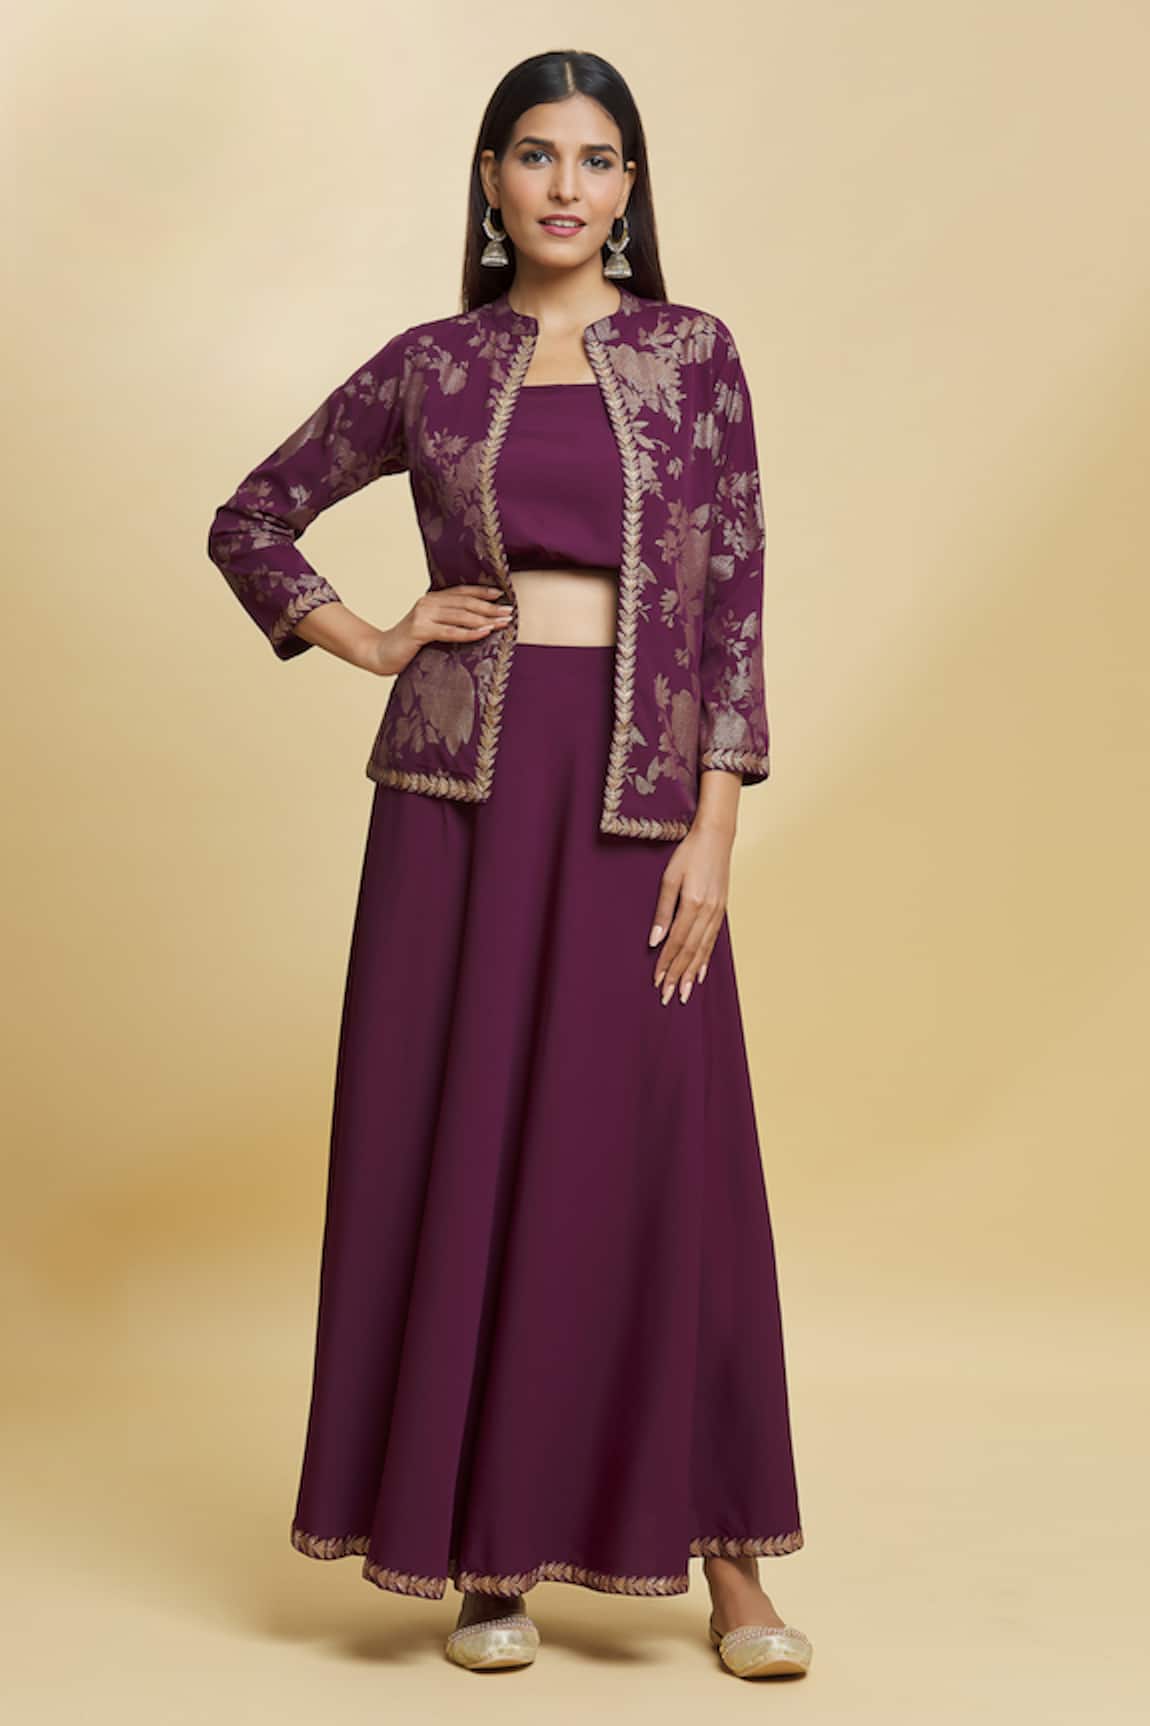 Adara Khan Floral Pattern Jacket Skirt Set